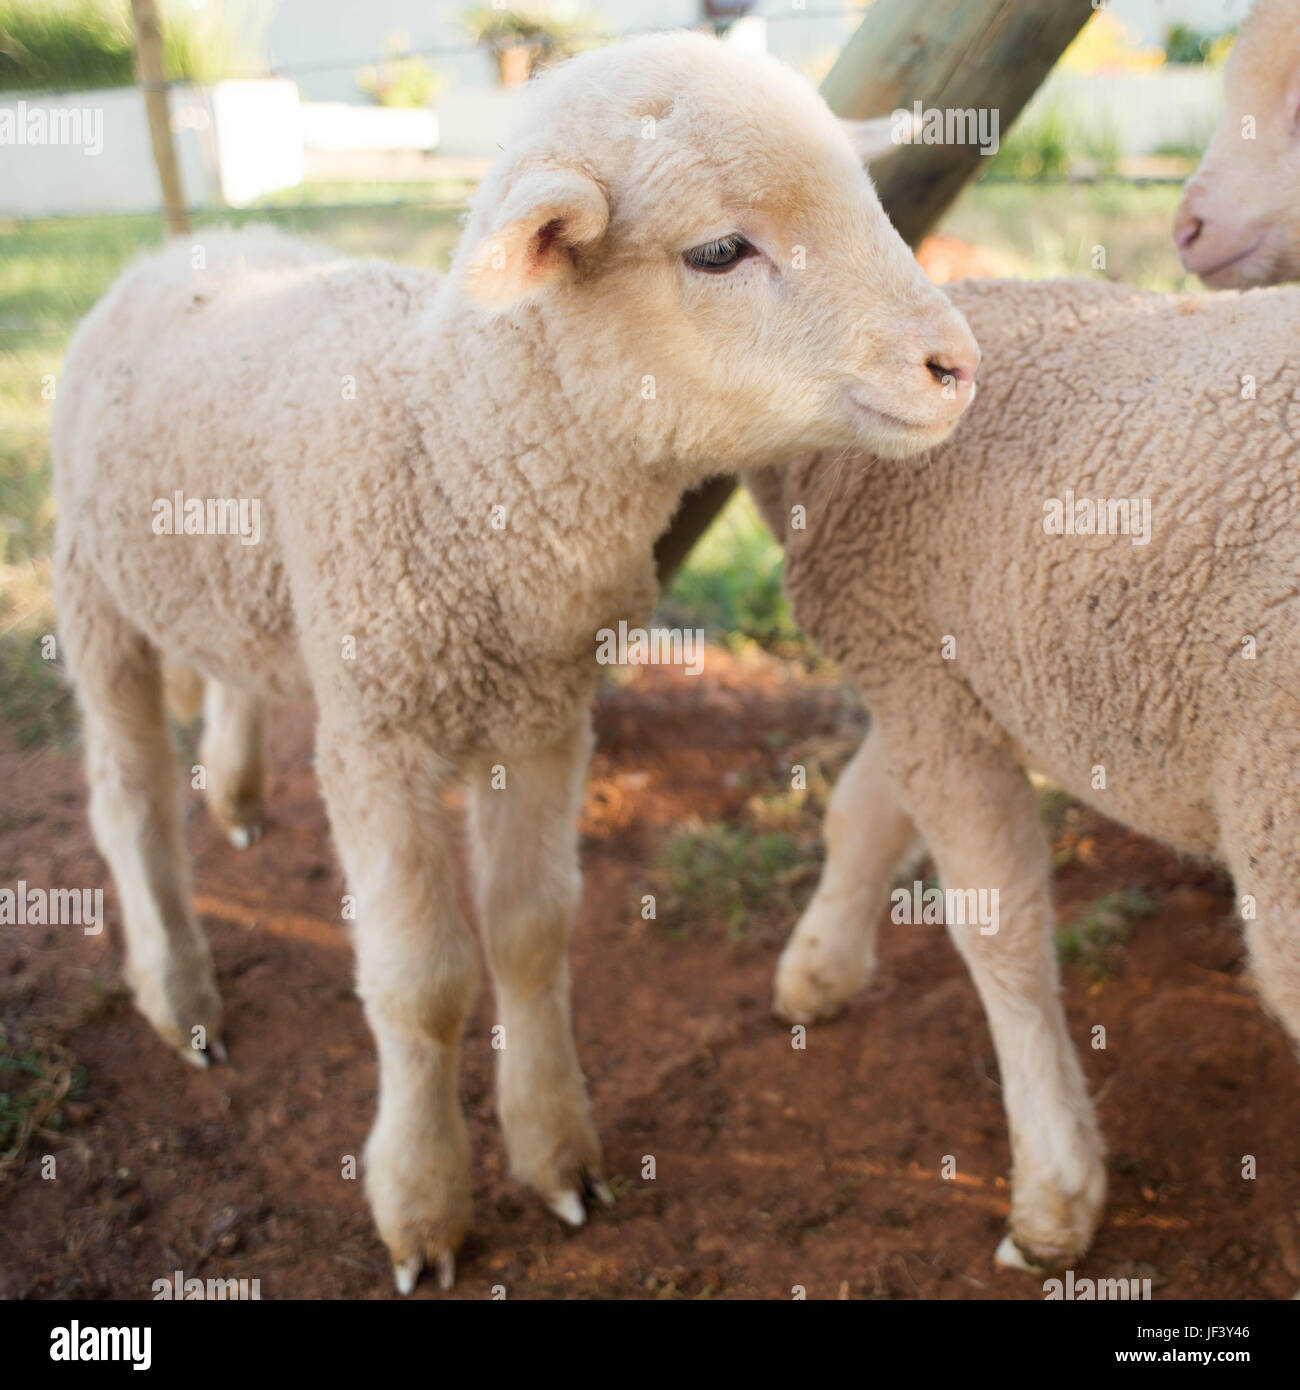 Newly born lamb in pen Stock Photo